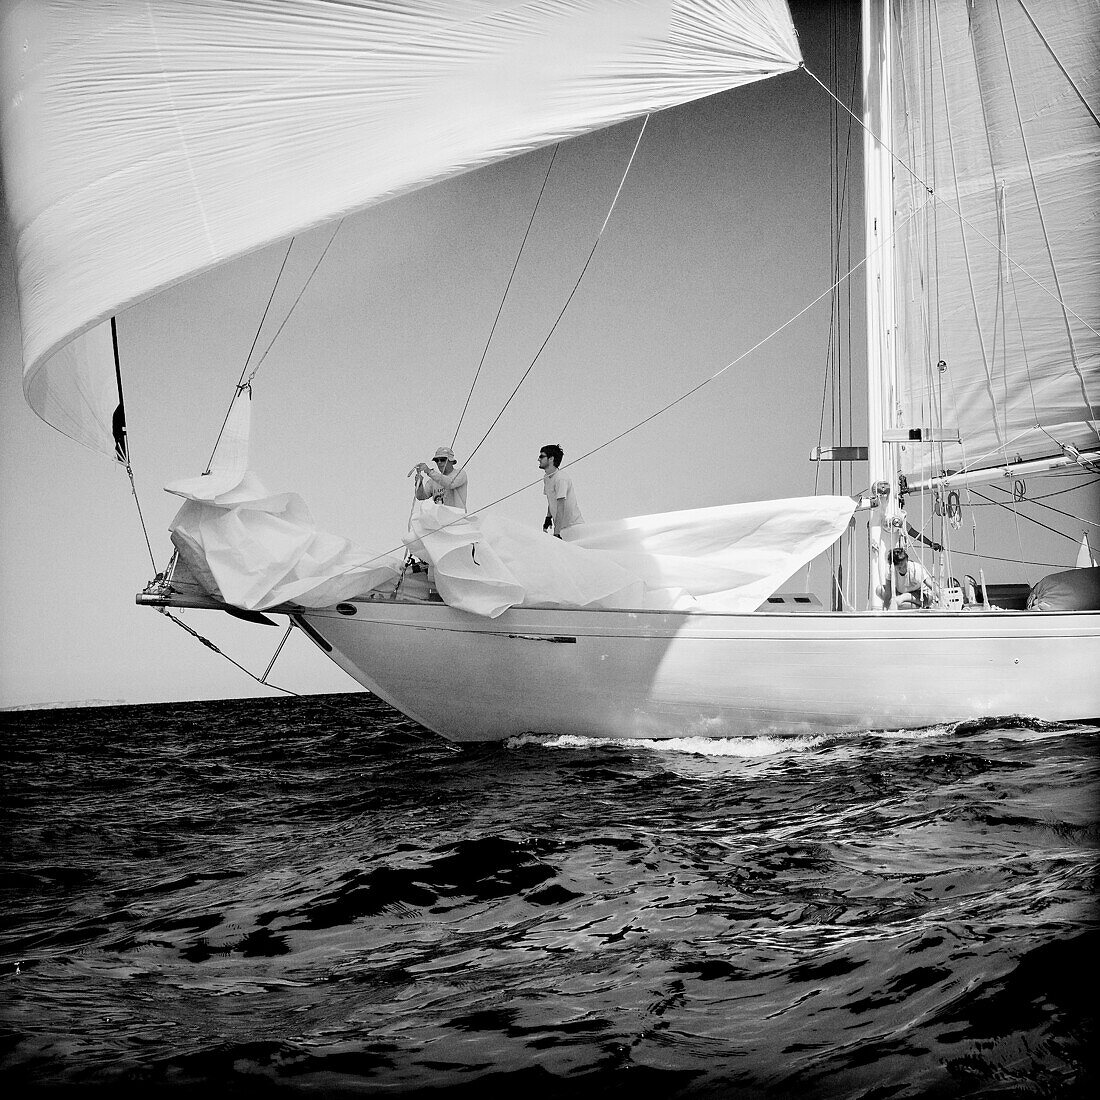 Sailing ship, boat race, Minorca, Baleric Islands, Spain